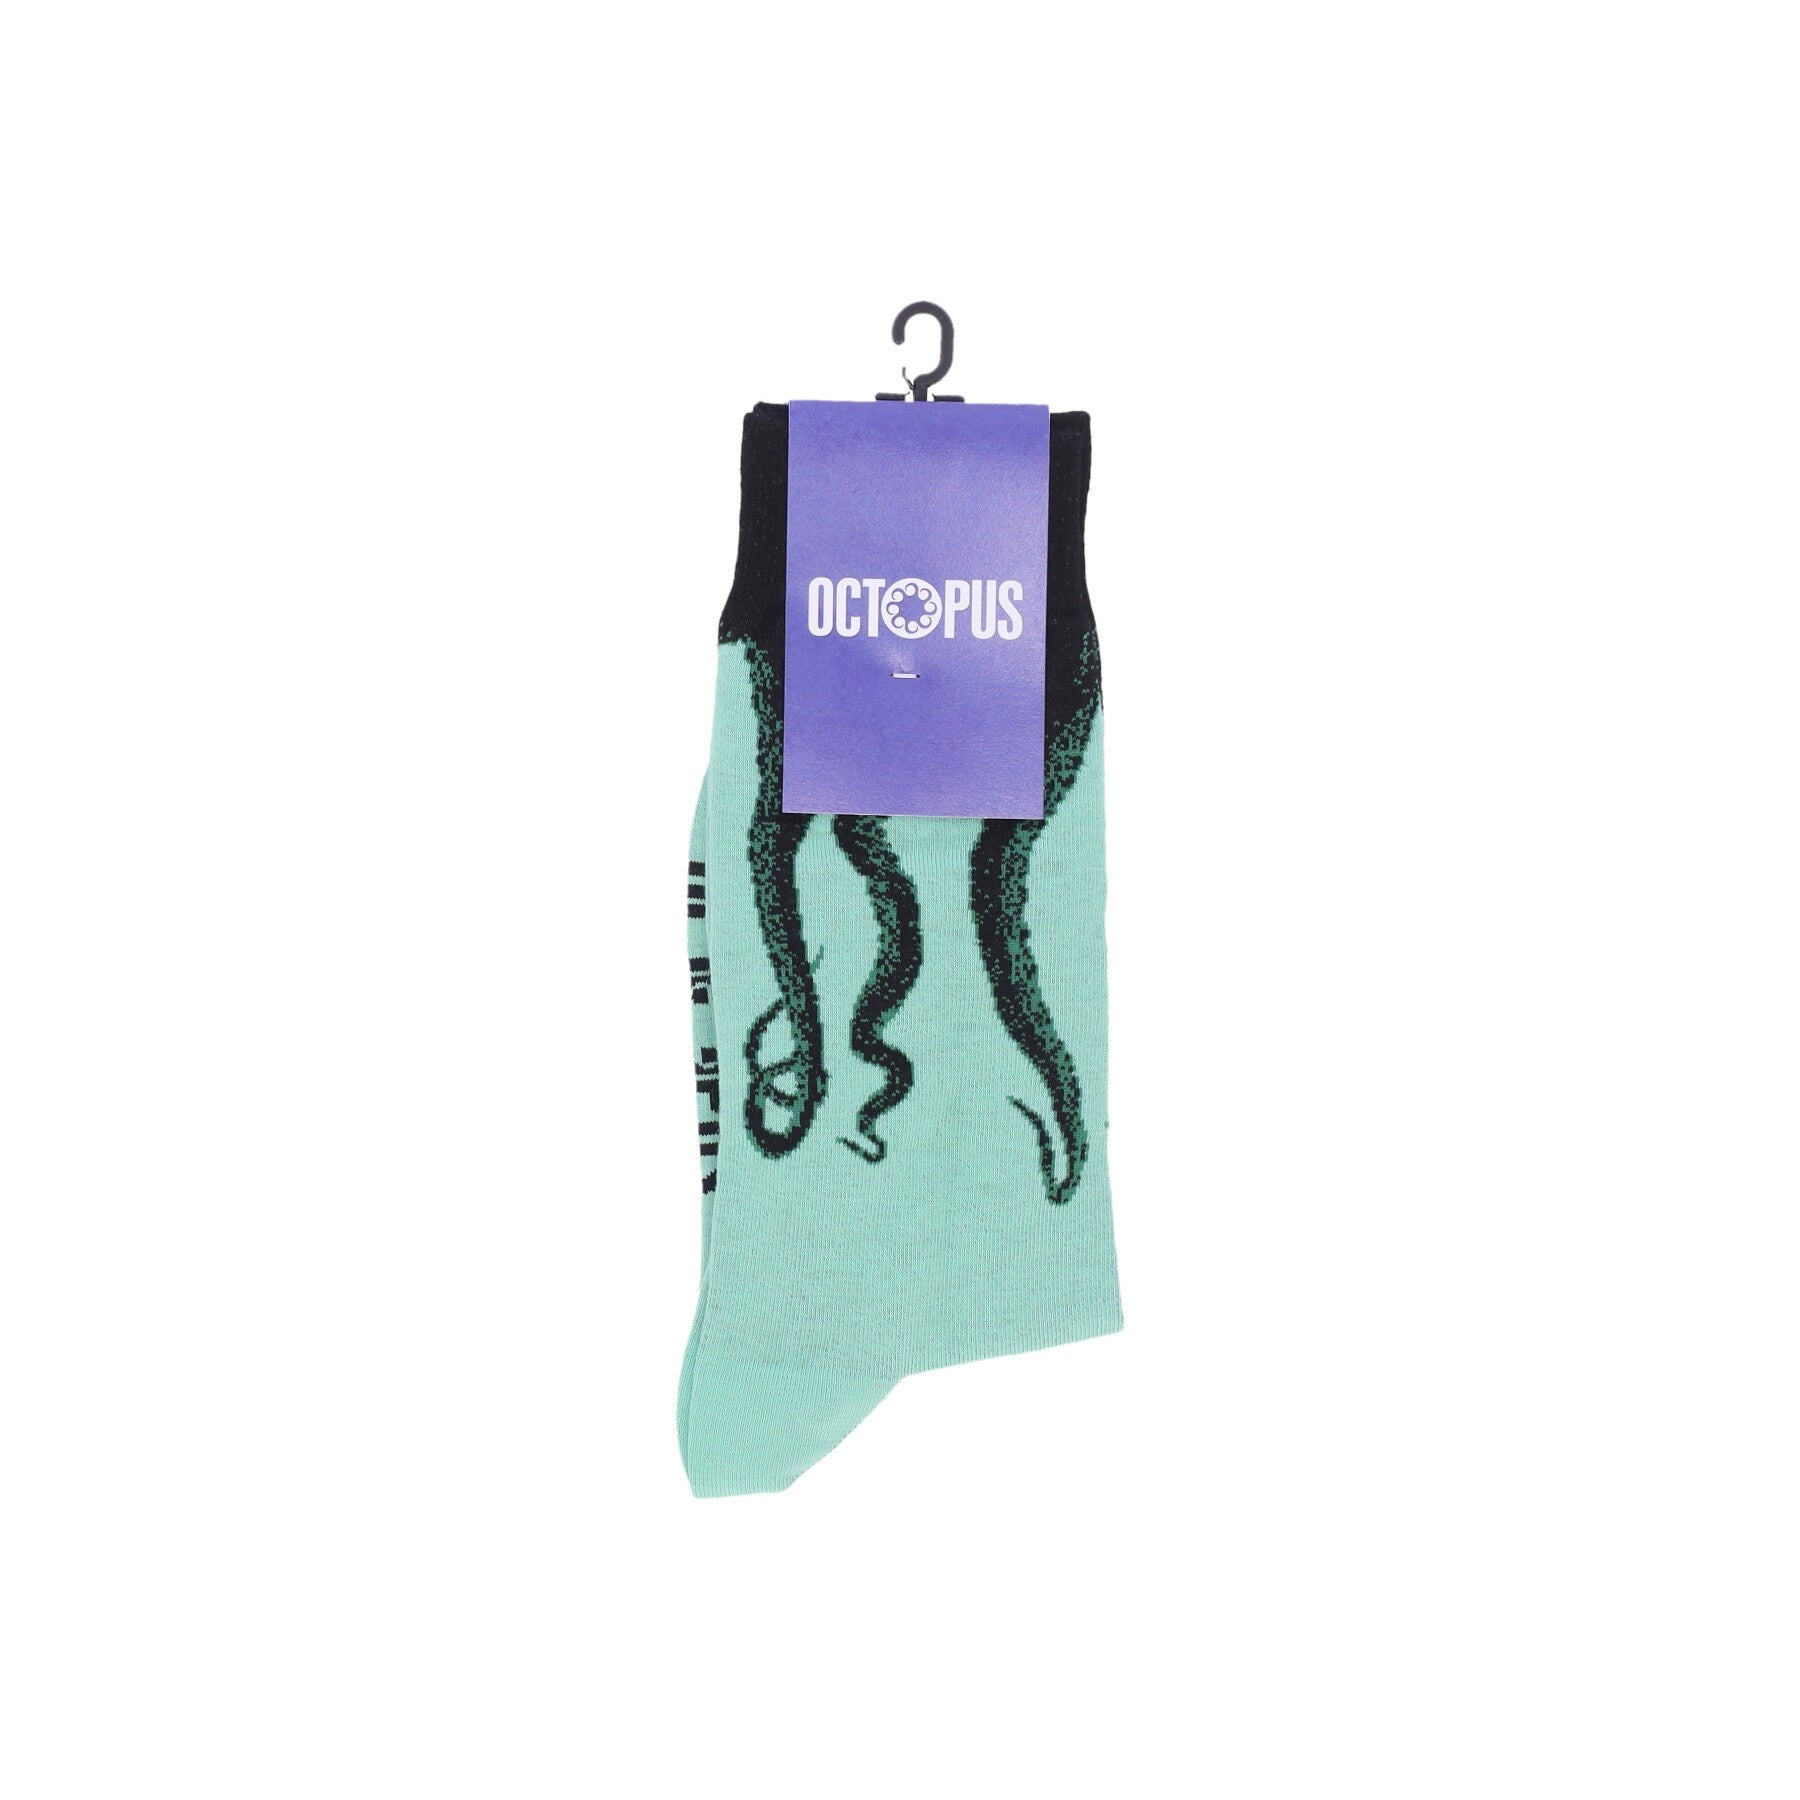 Octopus, Calza Media Uomo Original Socks, 